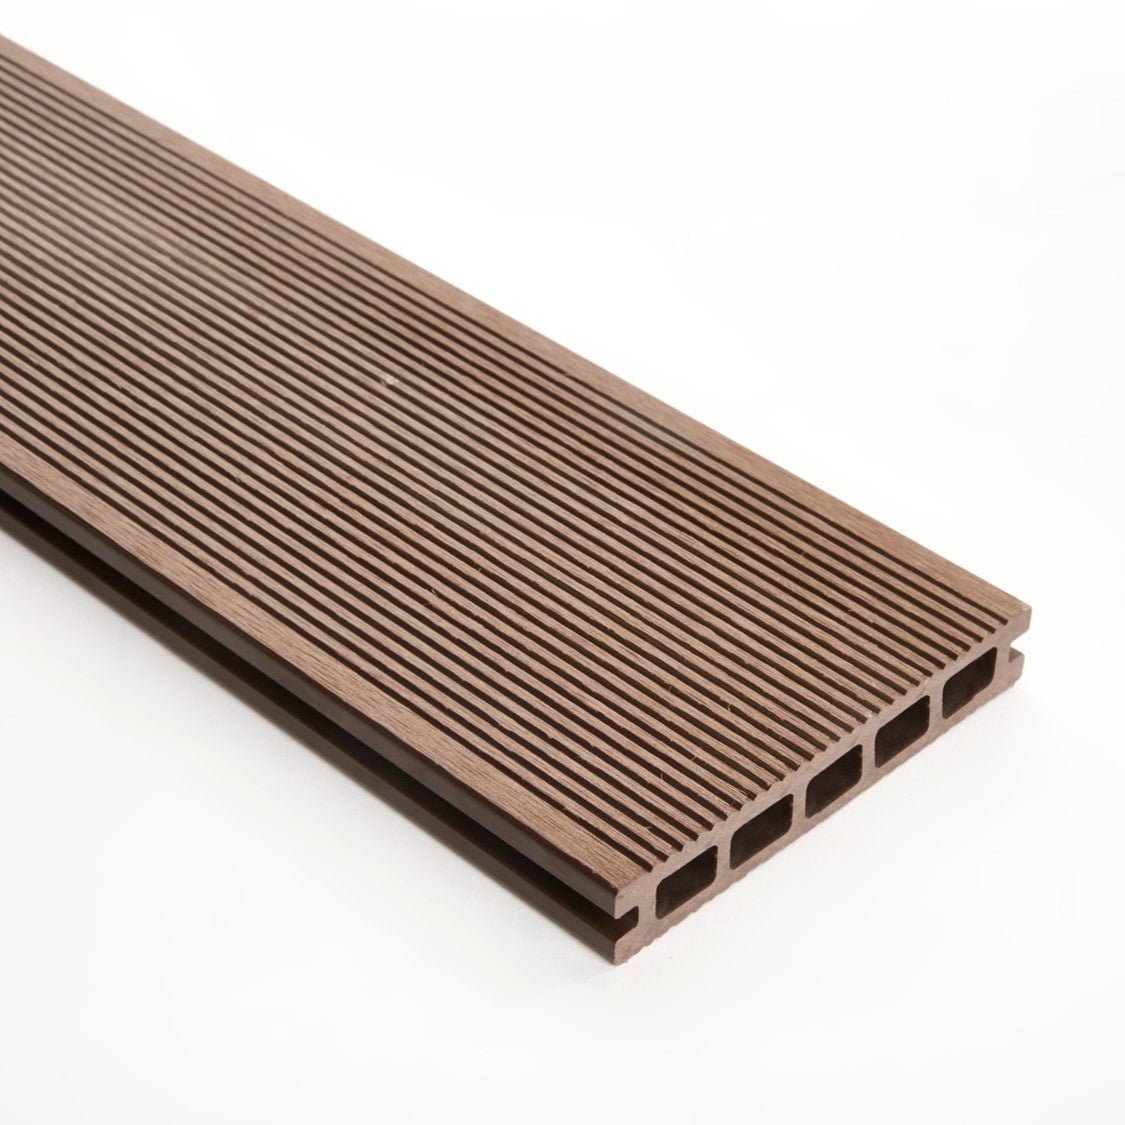 Triton 5m Double Faced Woodgrain Composite Decking Board 148mm X 25mm - Trade Warehouse